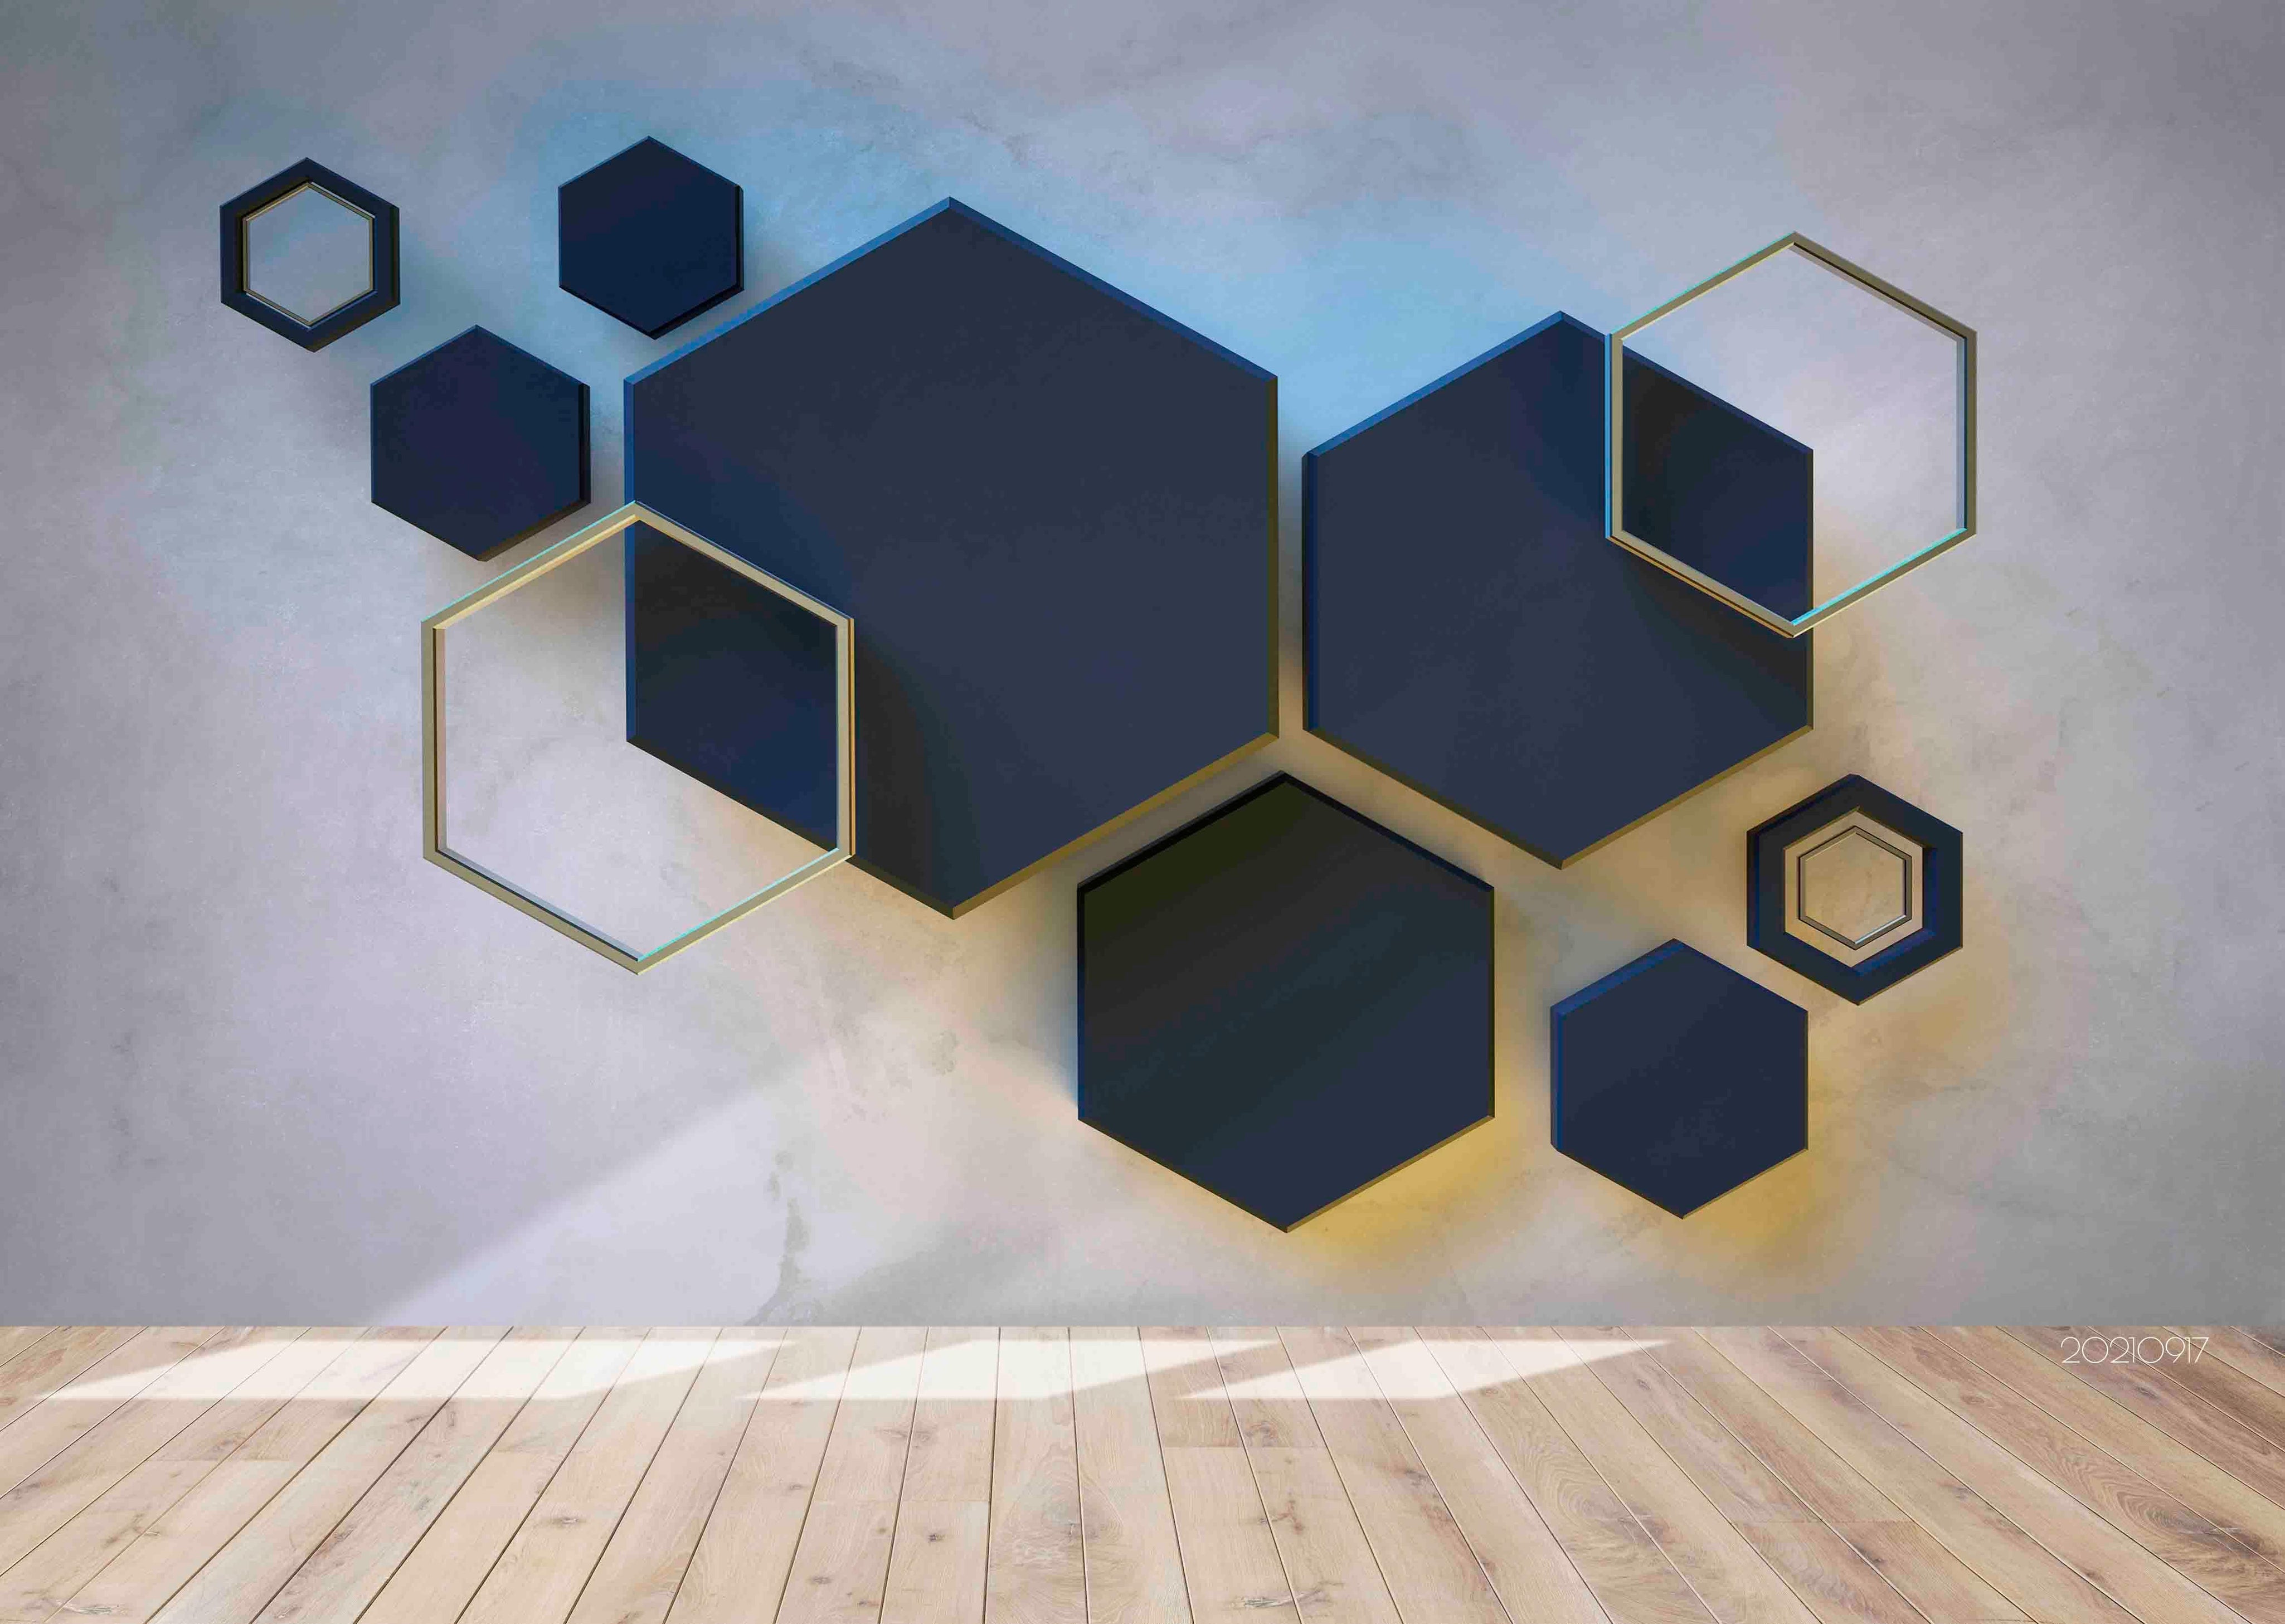 3D Abstract Geometric Marble Texture Wall Mural Wallpaper LQH 67- Jess Art Decoration